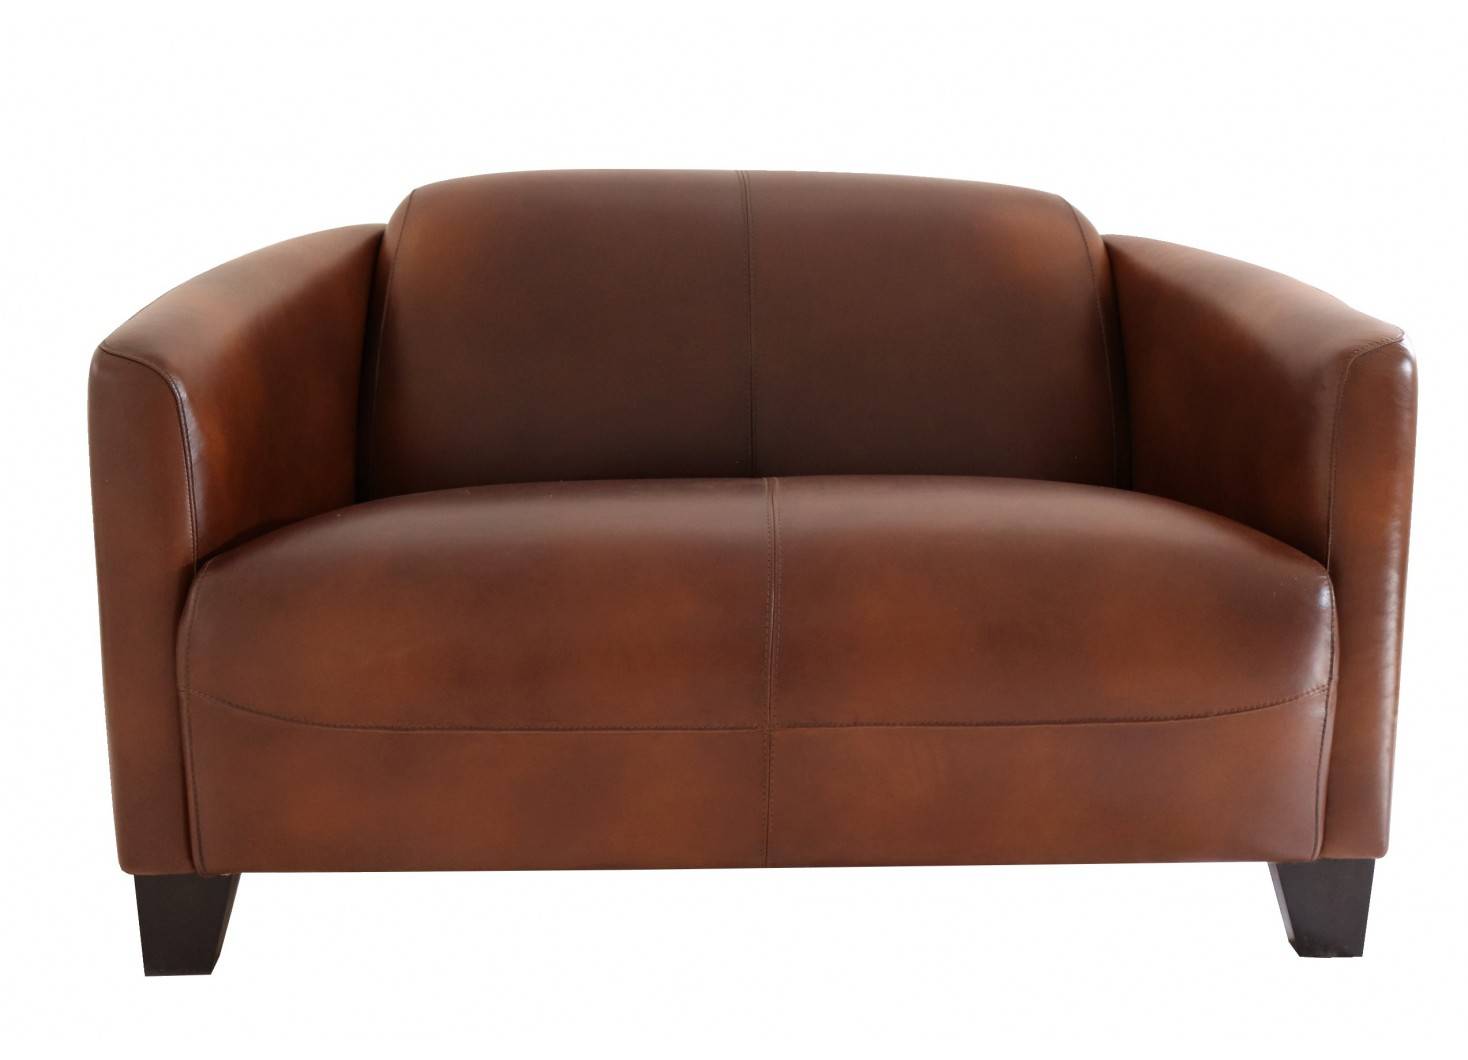 Sofa club settee brown leather